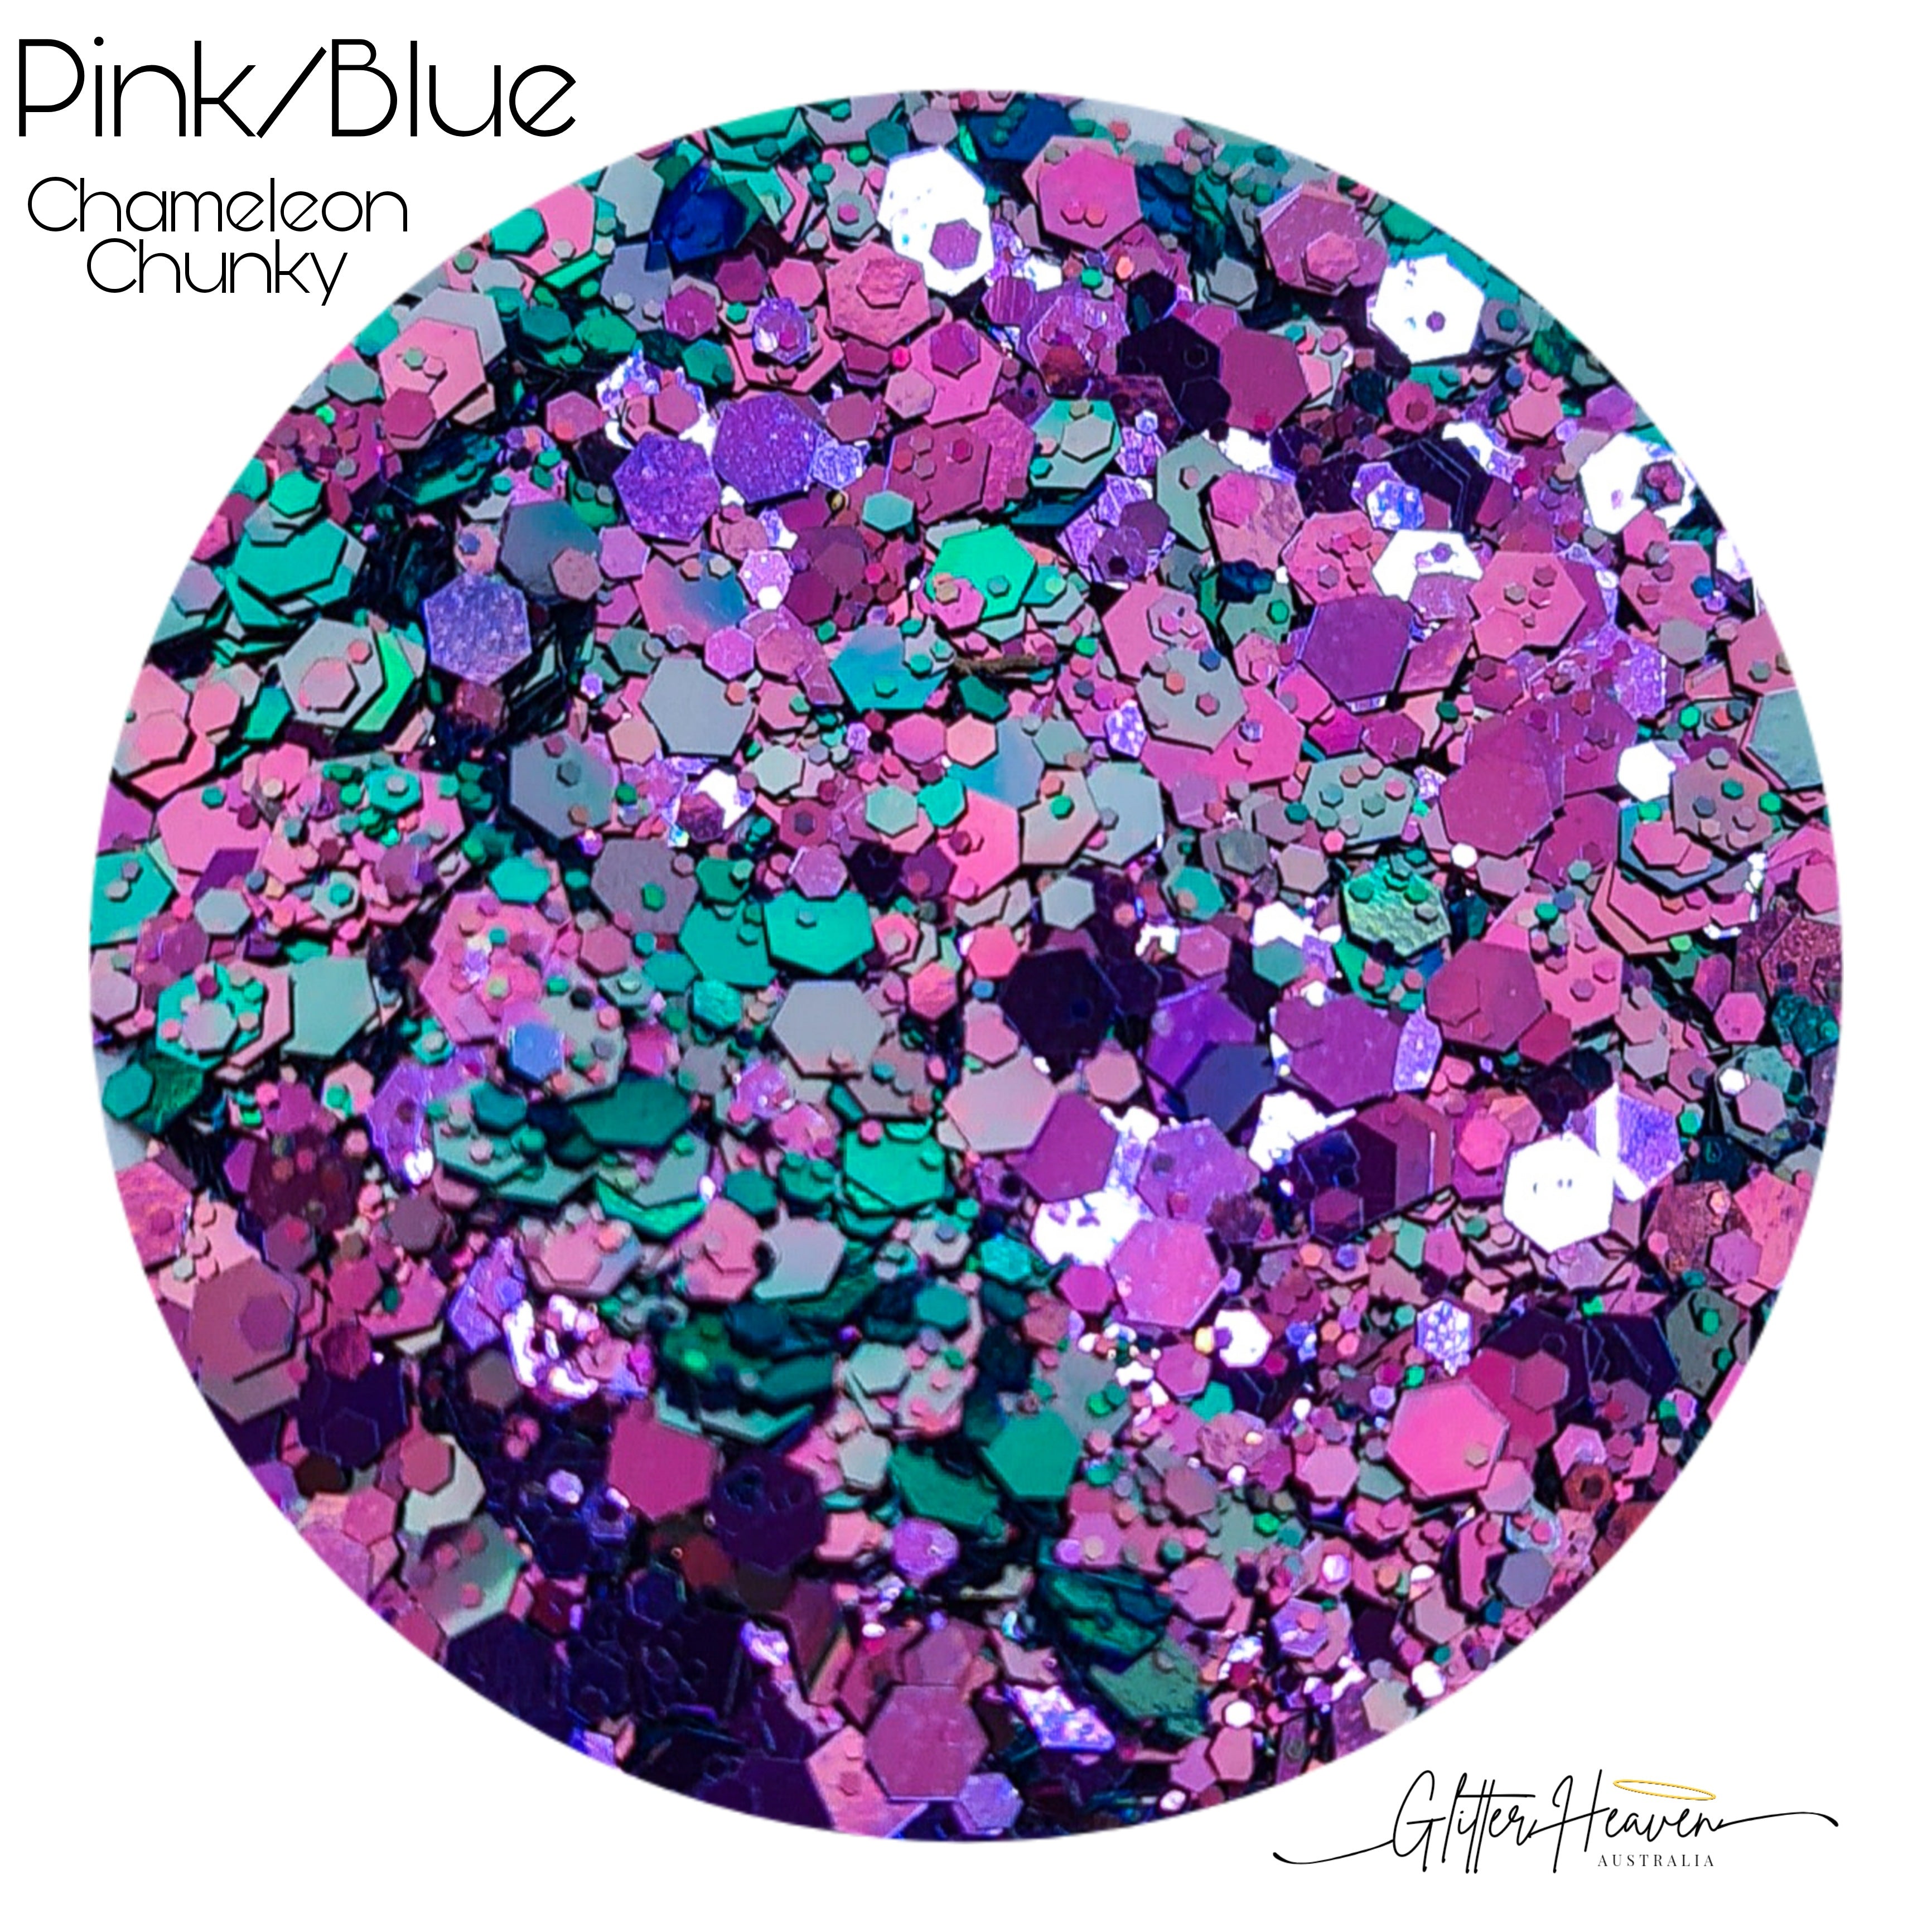 Pink/Blue Chameleon Chunky